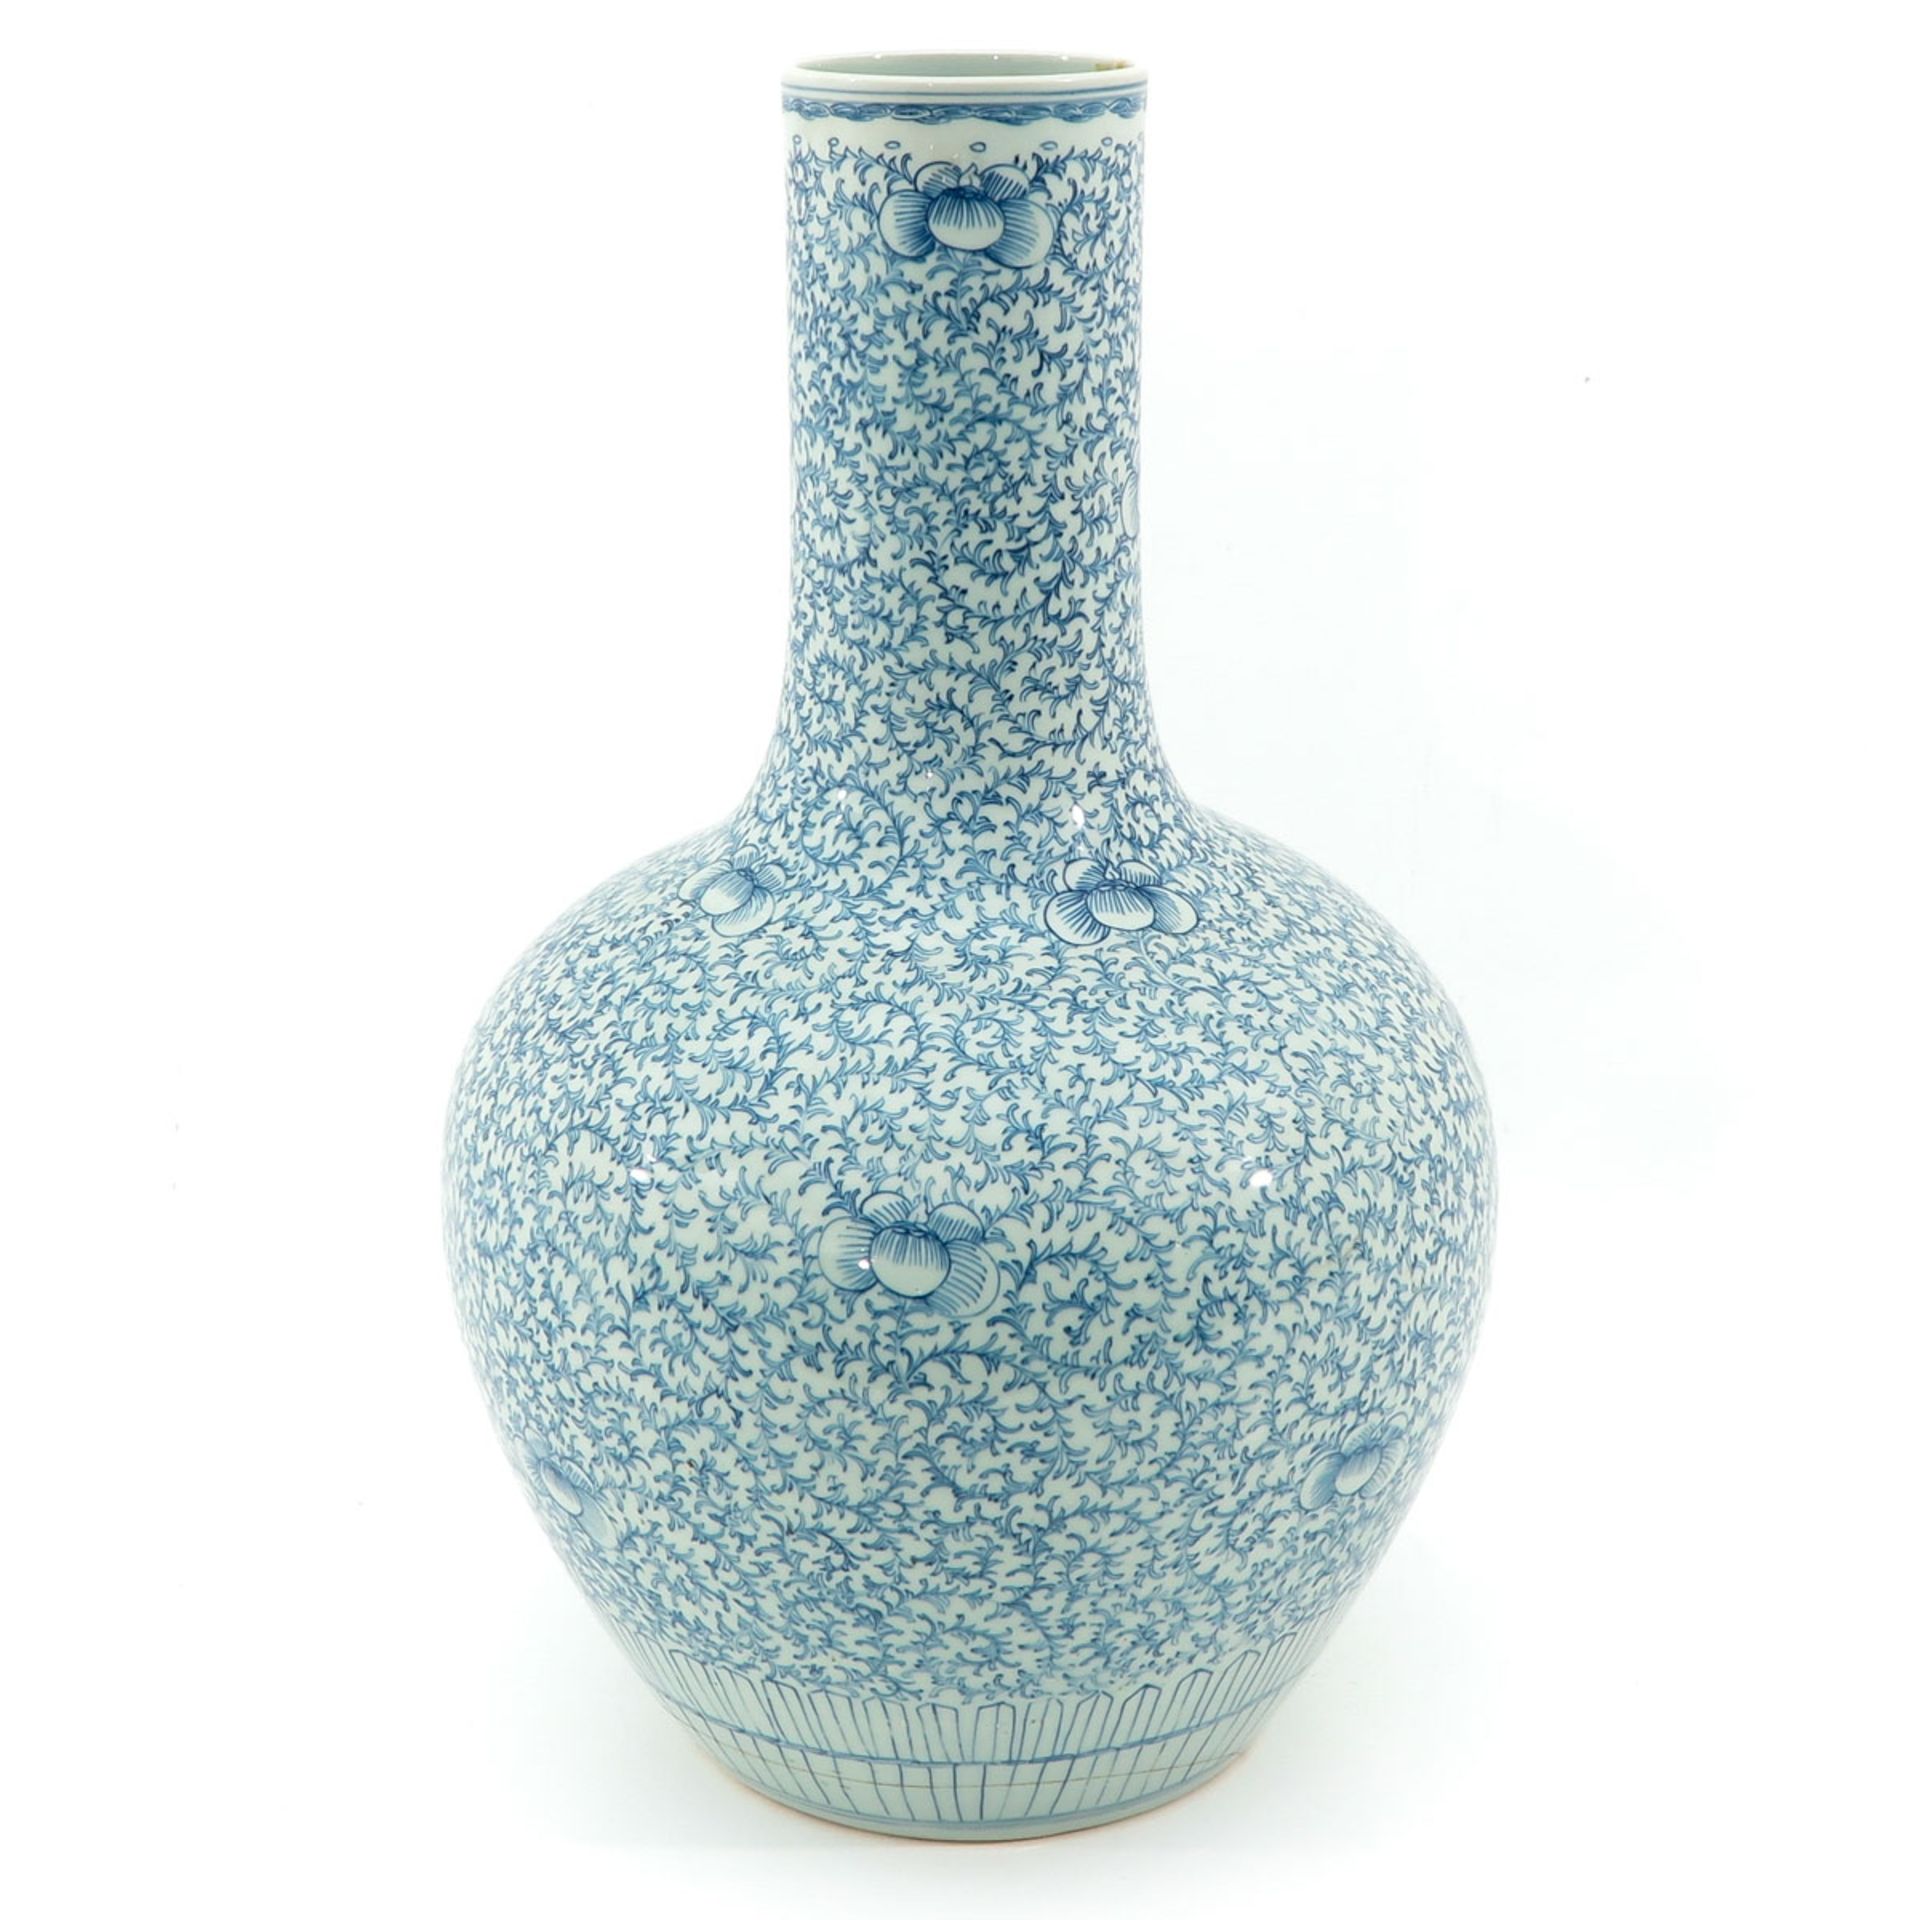 A Large Blue and White Bottle Vase